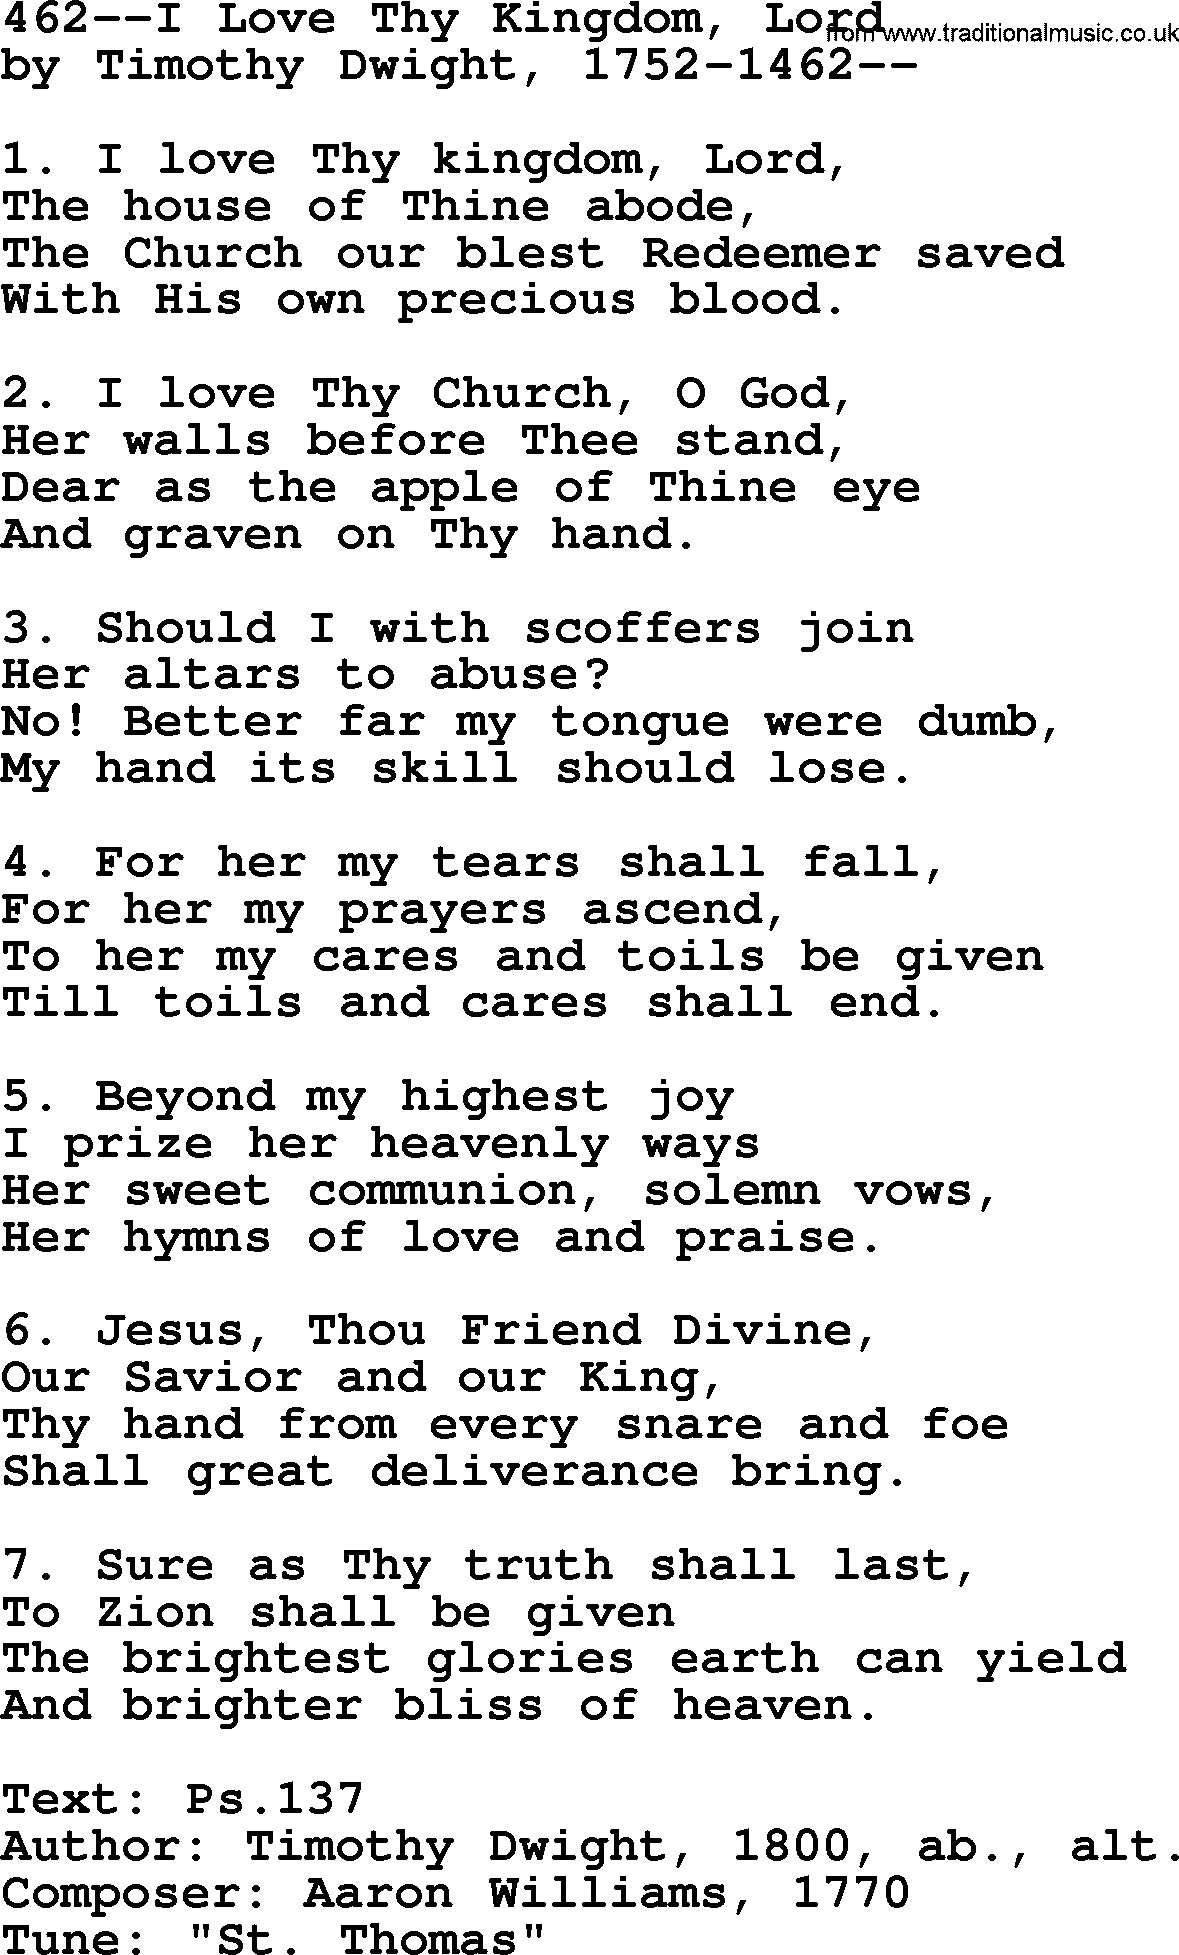 Lutheran Hymn: 462--I Love Thy Kingdom, Lord.txt lyrics with PDF